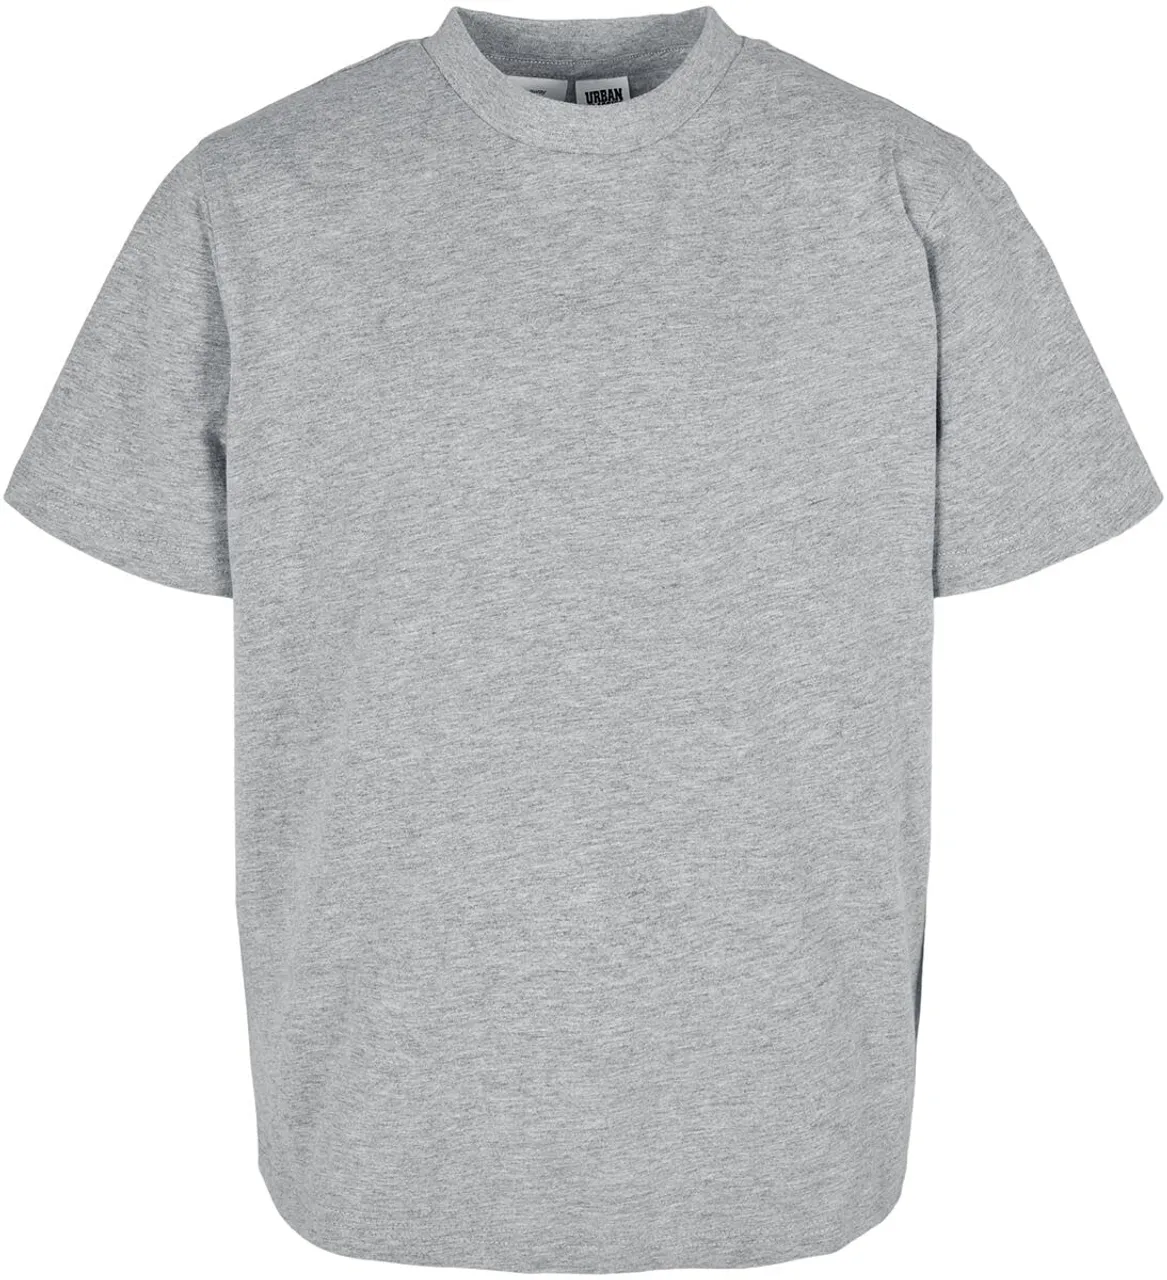 Urban Classics Boy's UCK006-Boys Tall Tee T-Shirt